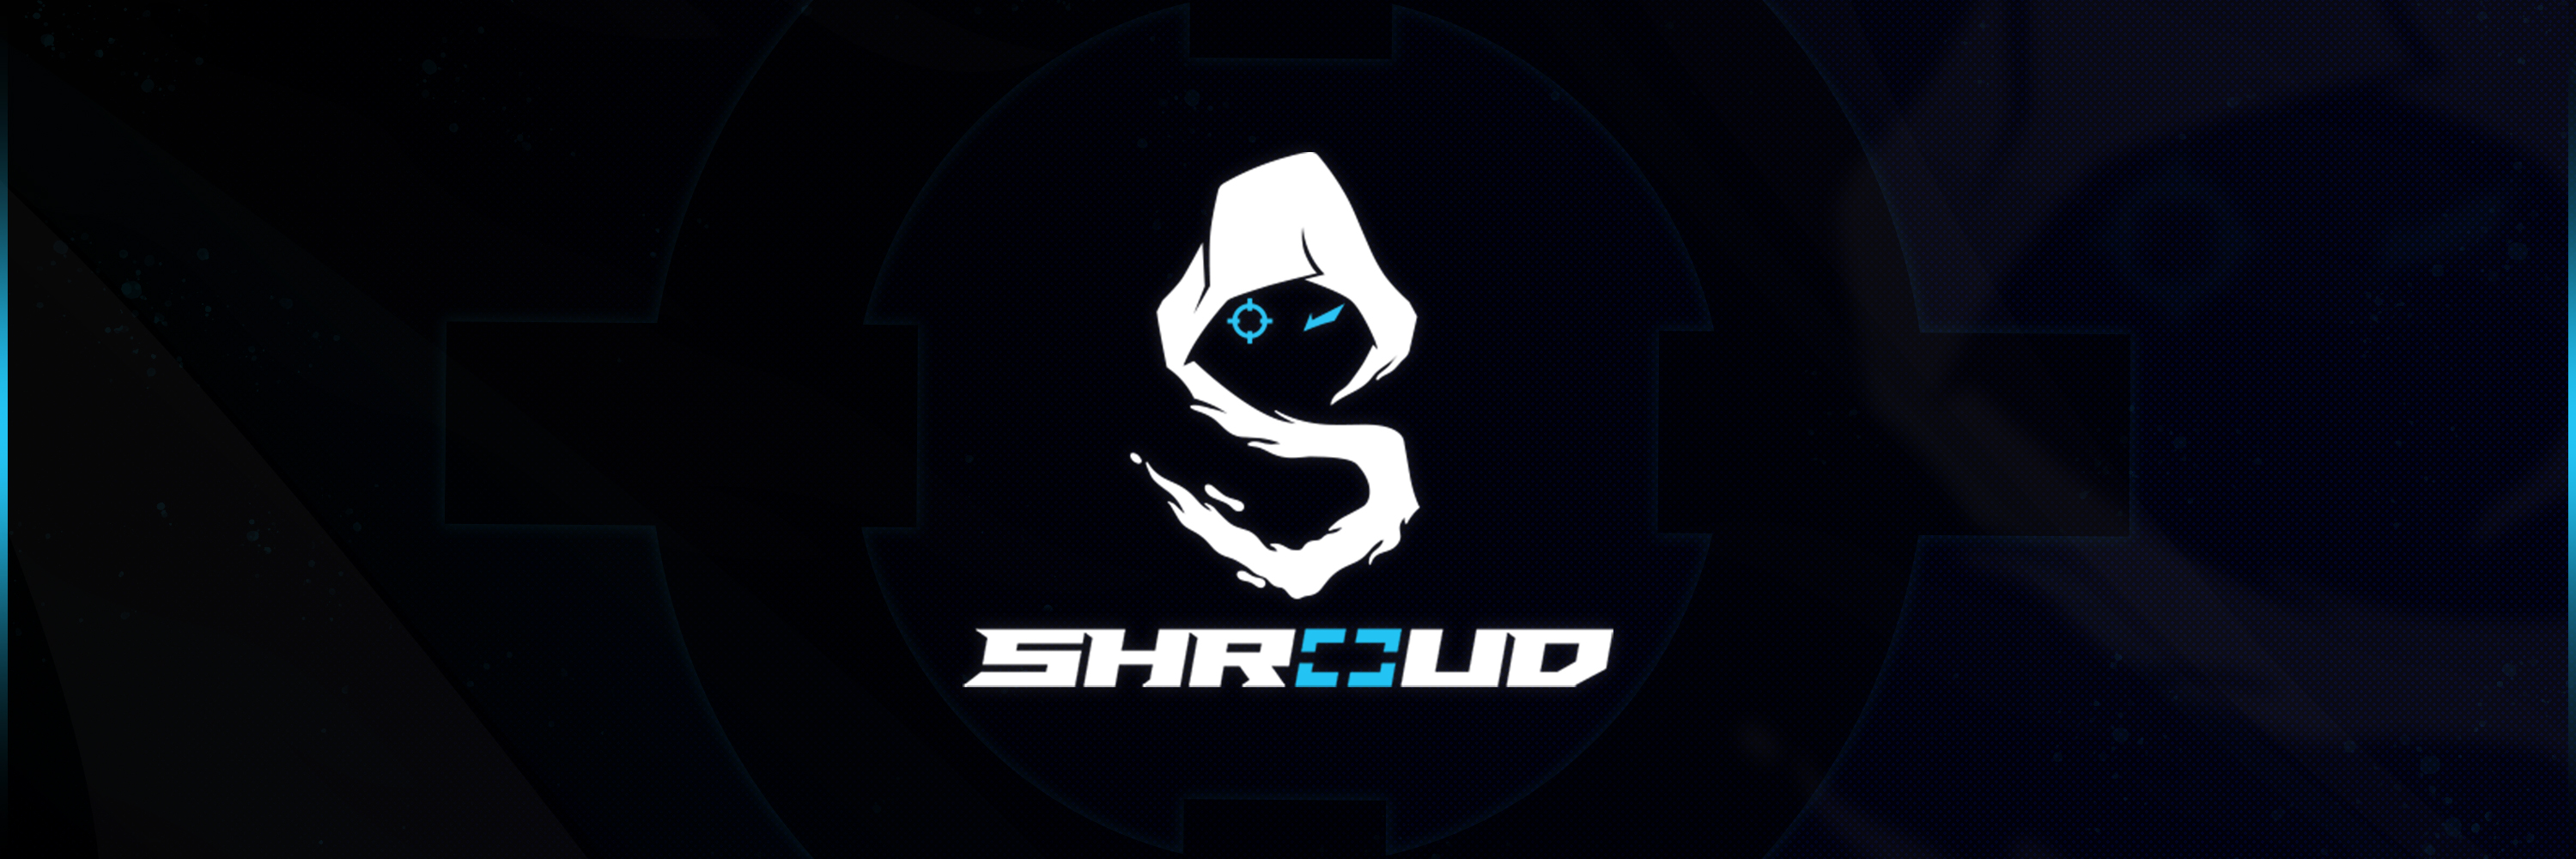 twitter banner for CS:GO player Stewie2k